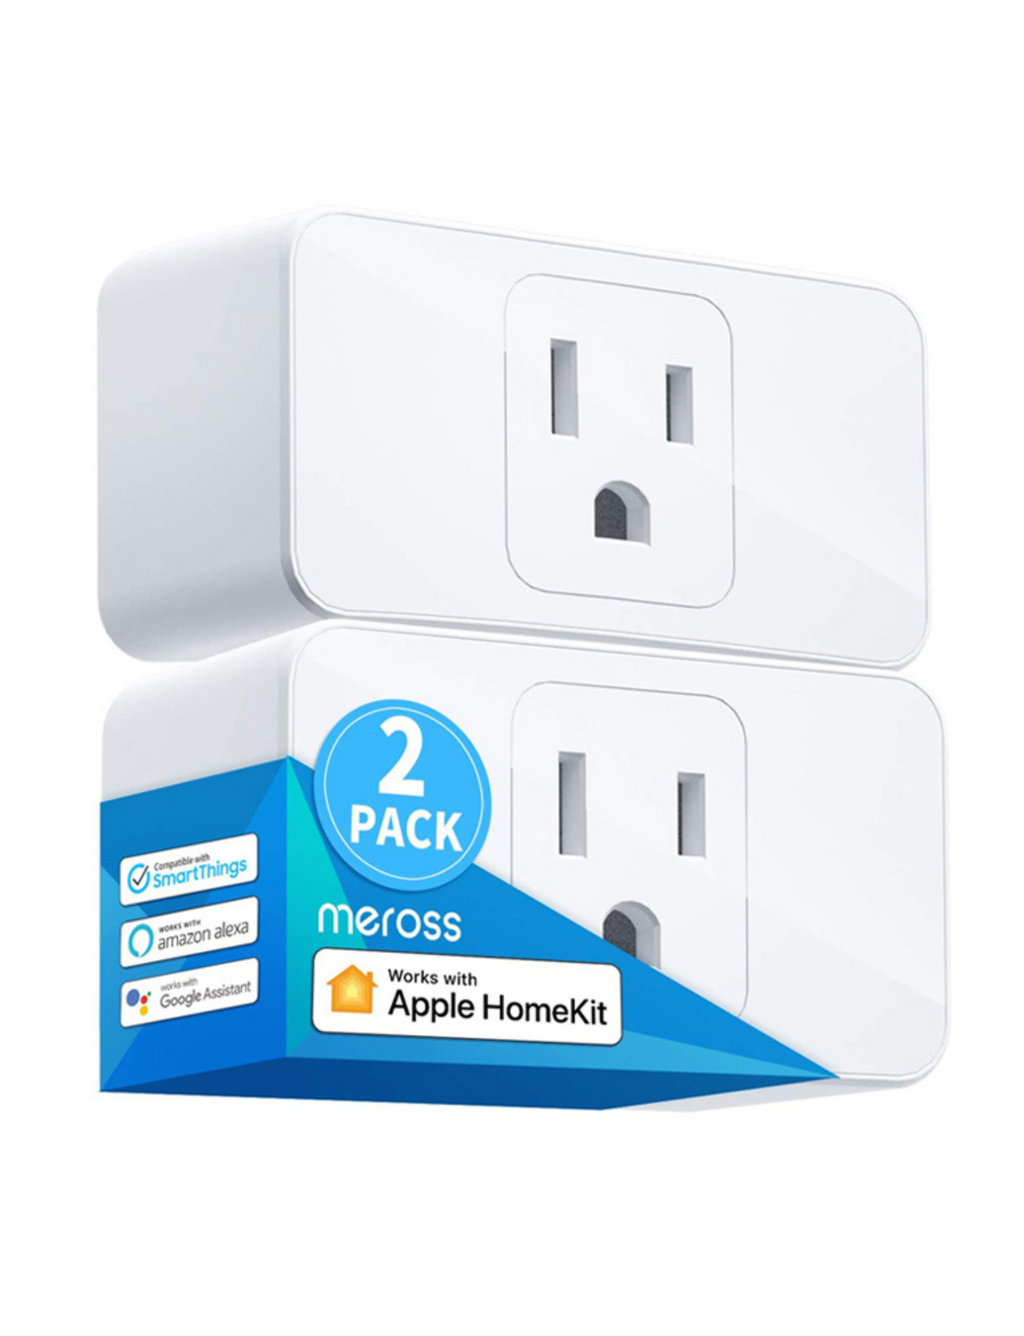 Meross smart plug review - affordable HomeKit smart plug - HomeKit Authority